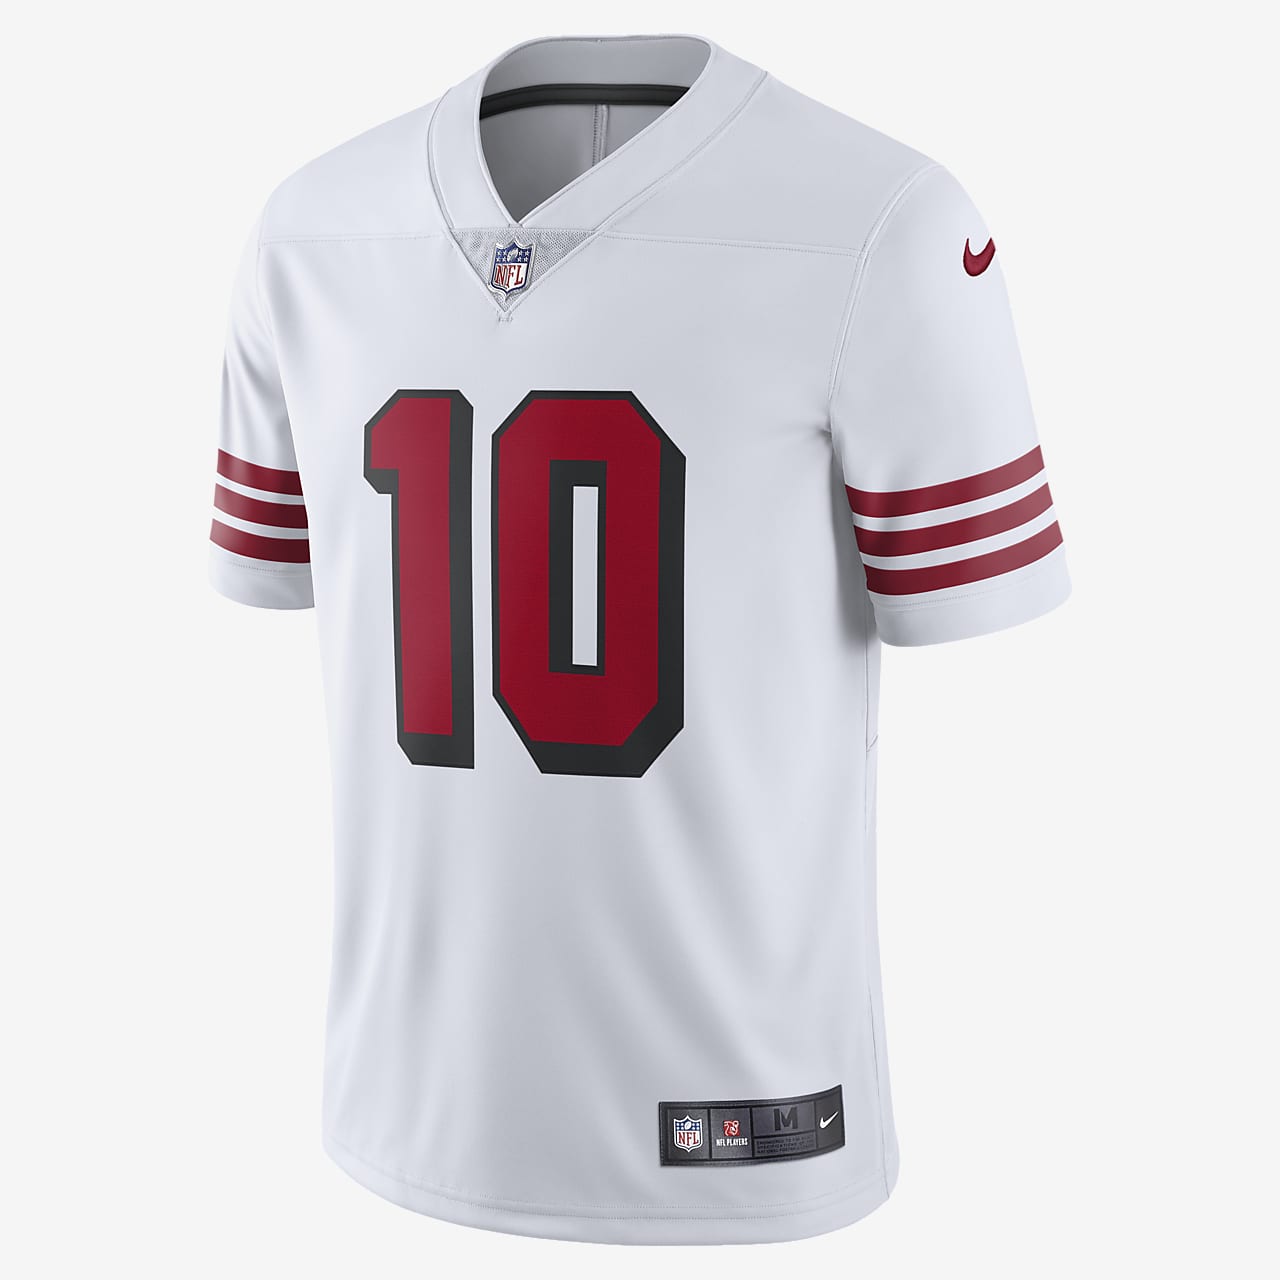 Camiseta de fútbol americano para hombre Limited la NFL San Francisco Nike.com